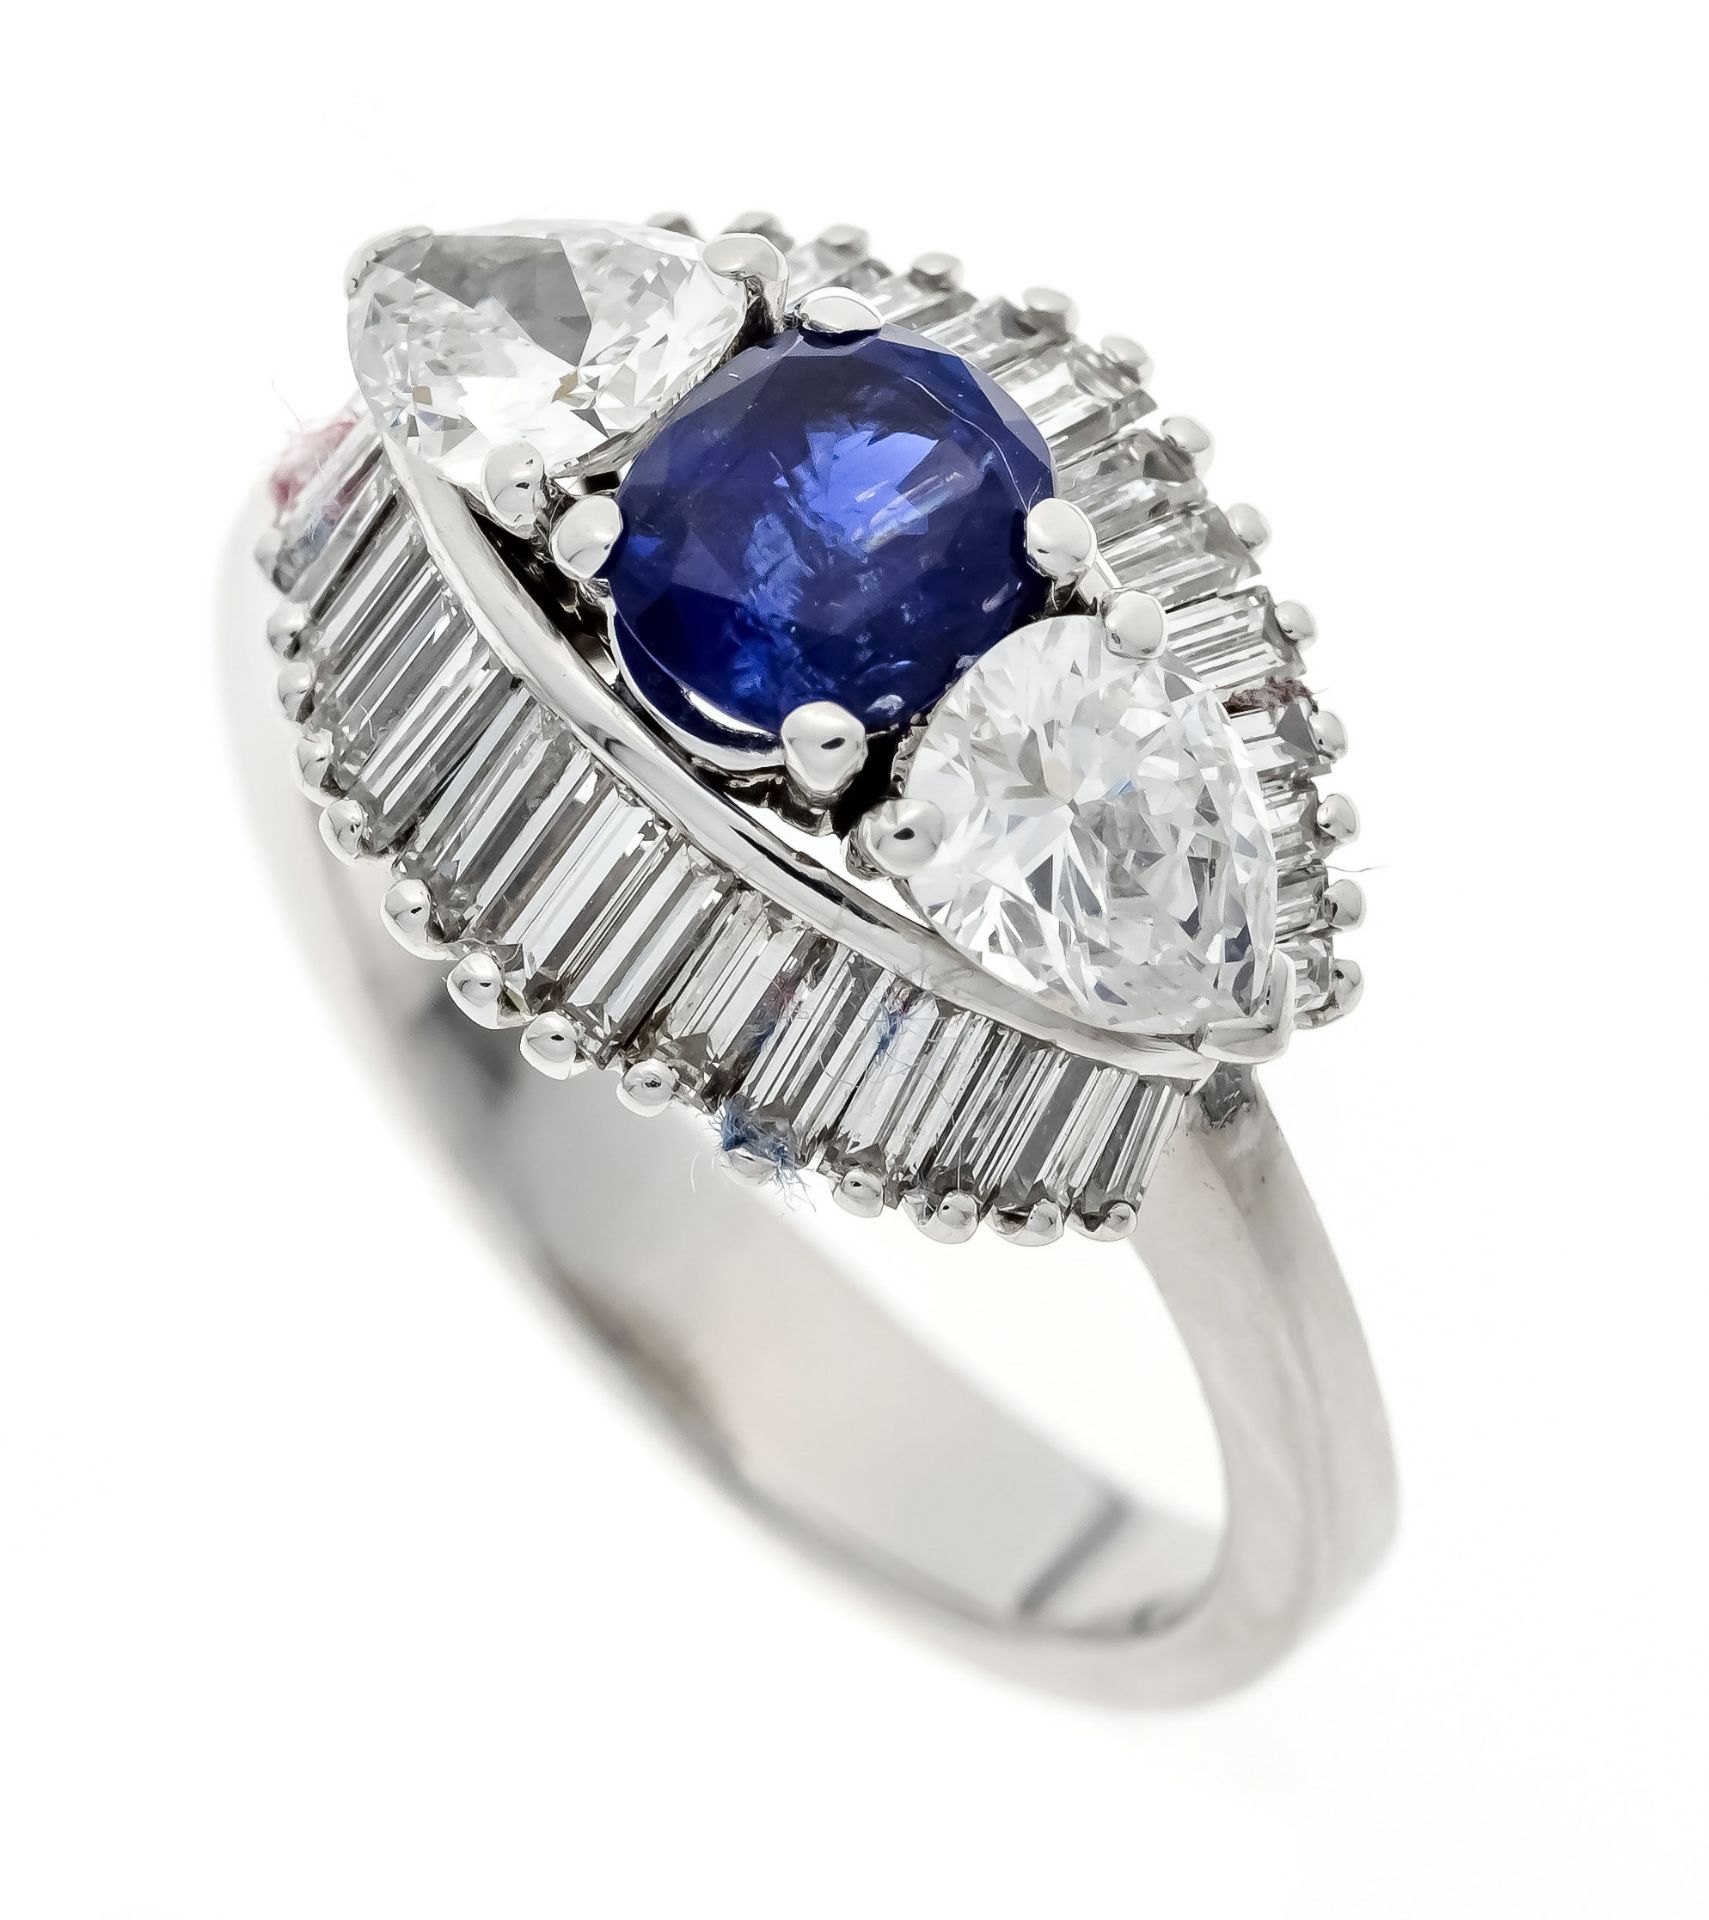 Saphir-Brillant-Ring WG 750/000